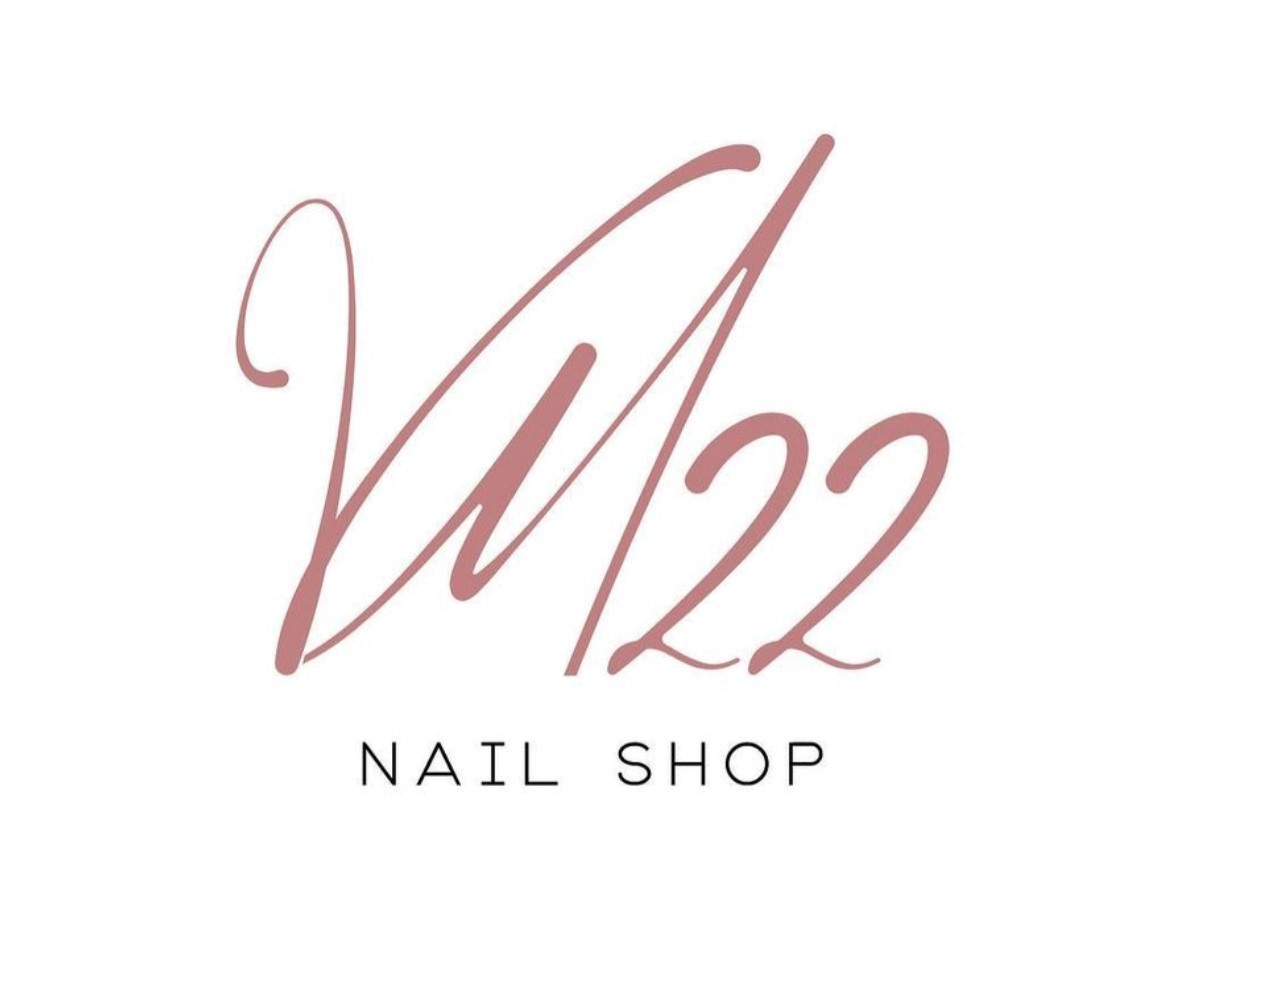 VM22 Nail Shop Logo